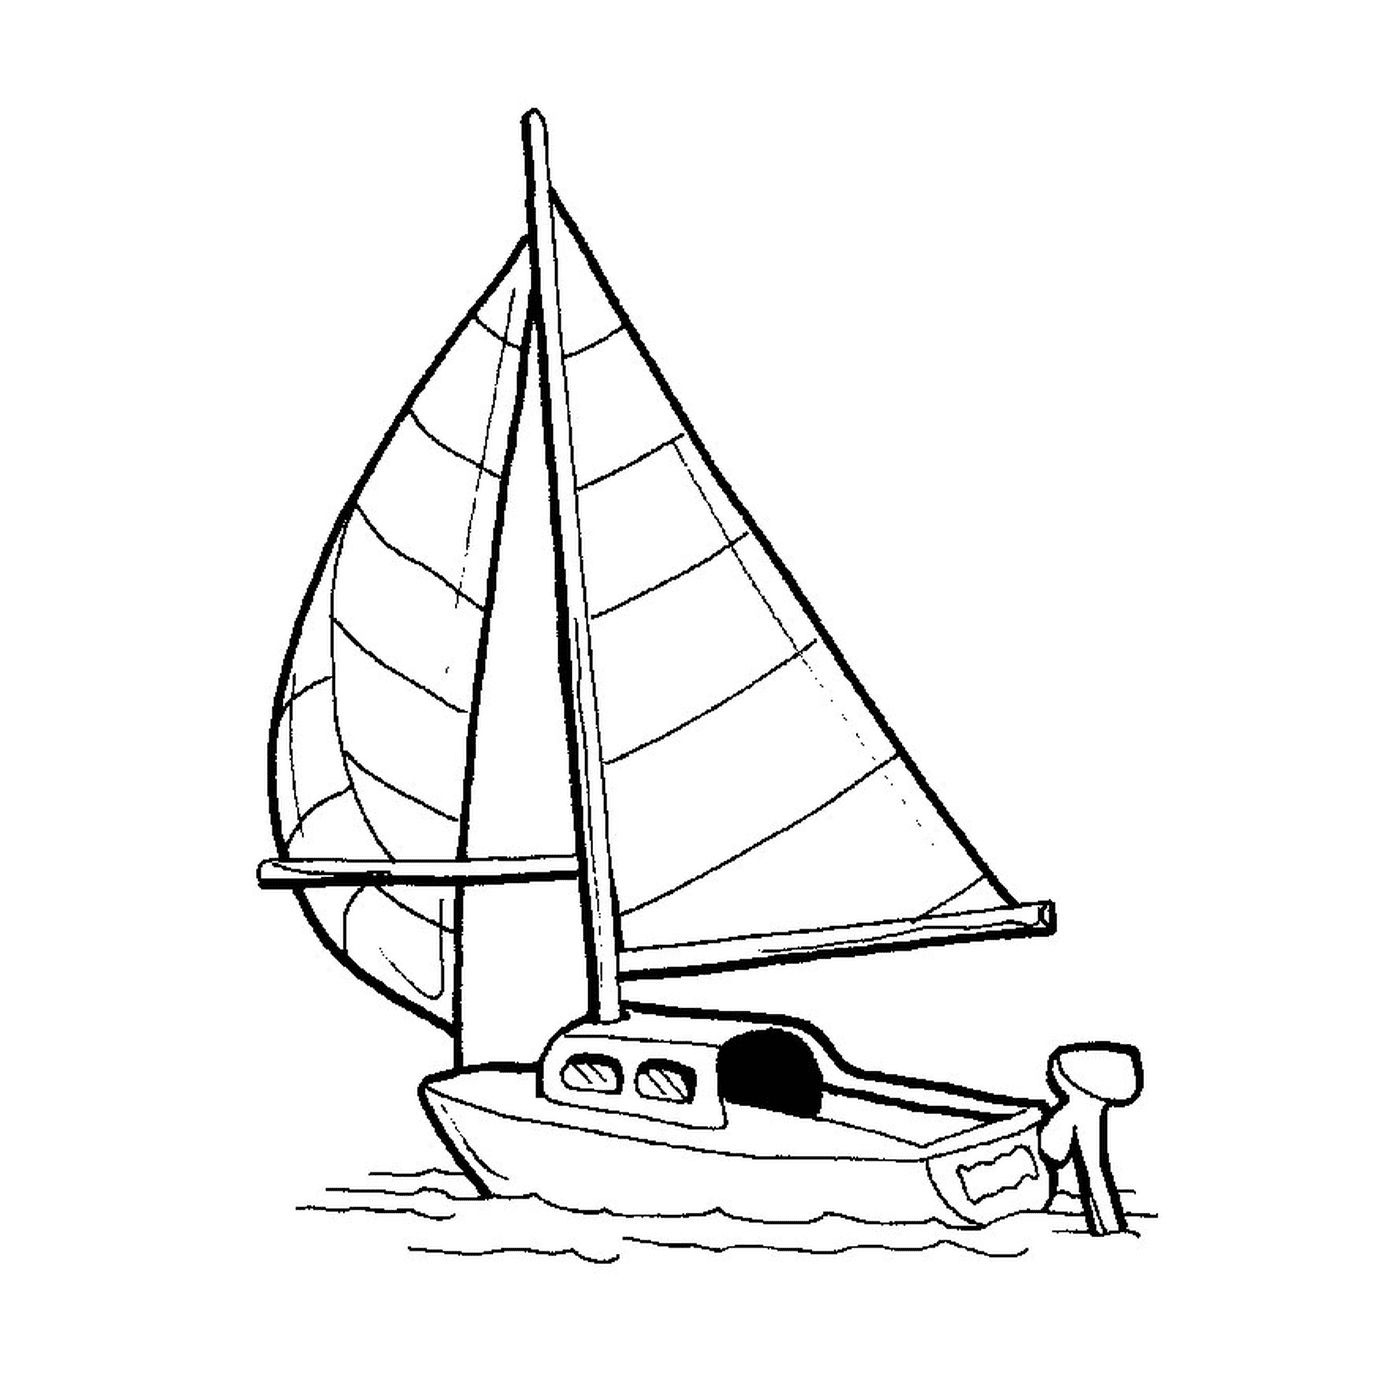  Una barca a vela è mostrata in un disegno 